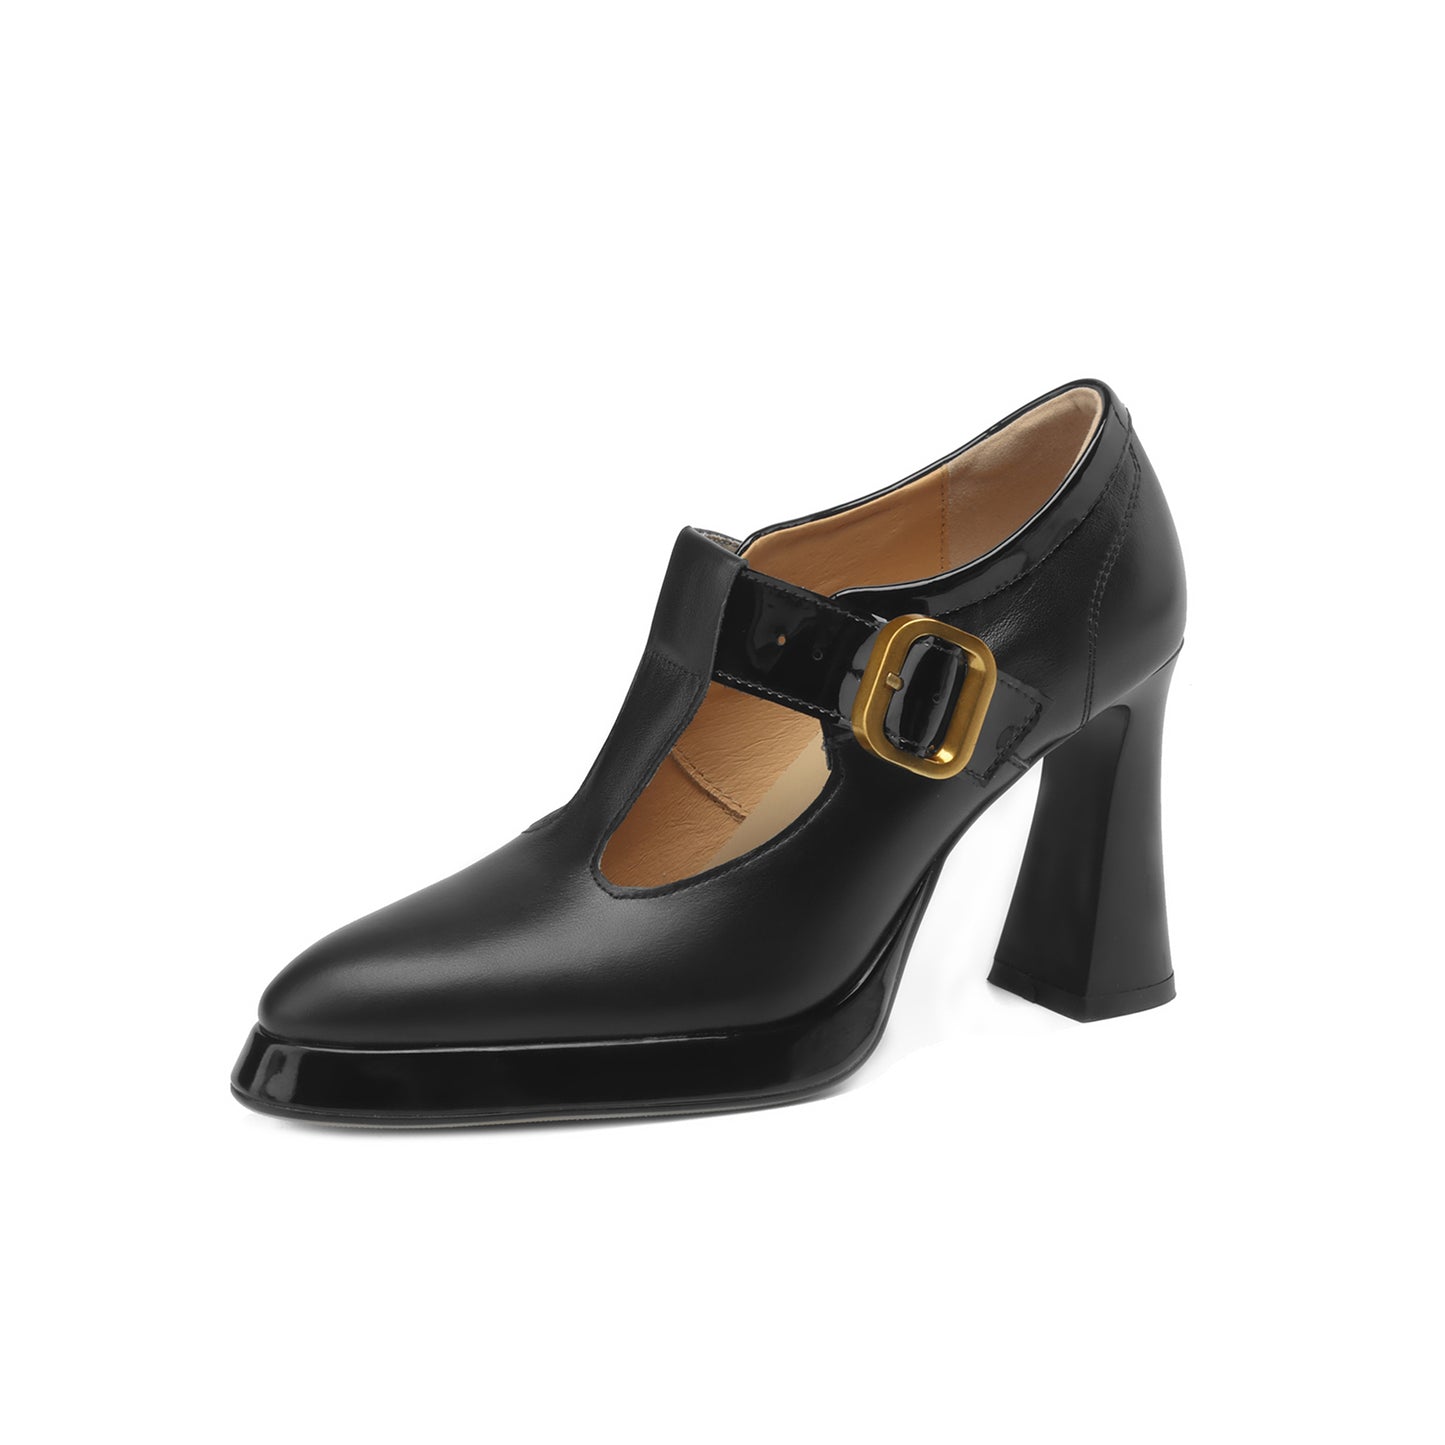 TinaCus Handmade Women's Genuine Leather Platform High Heel Pointed Toe Buckle Pumps Shoes